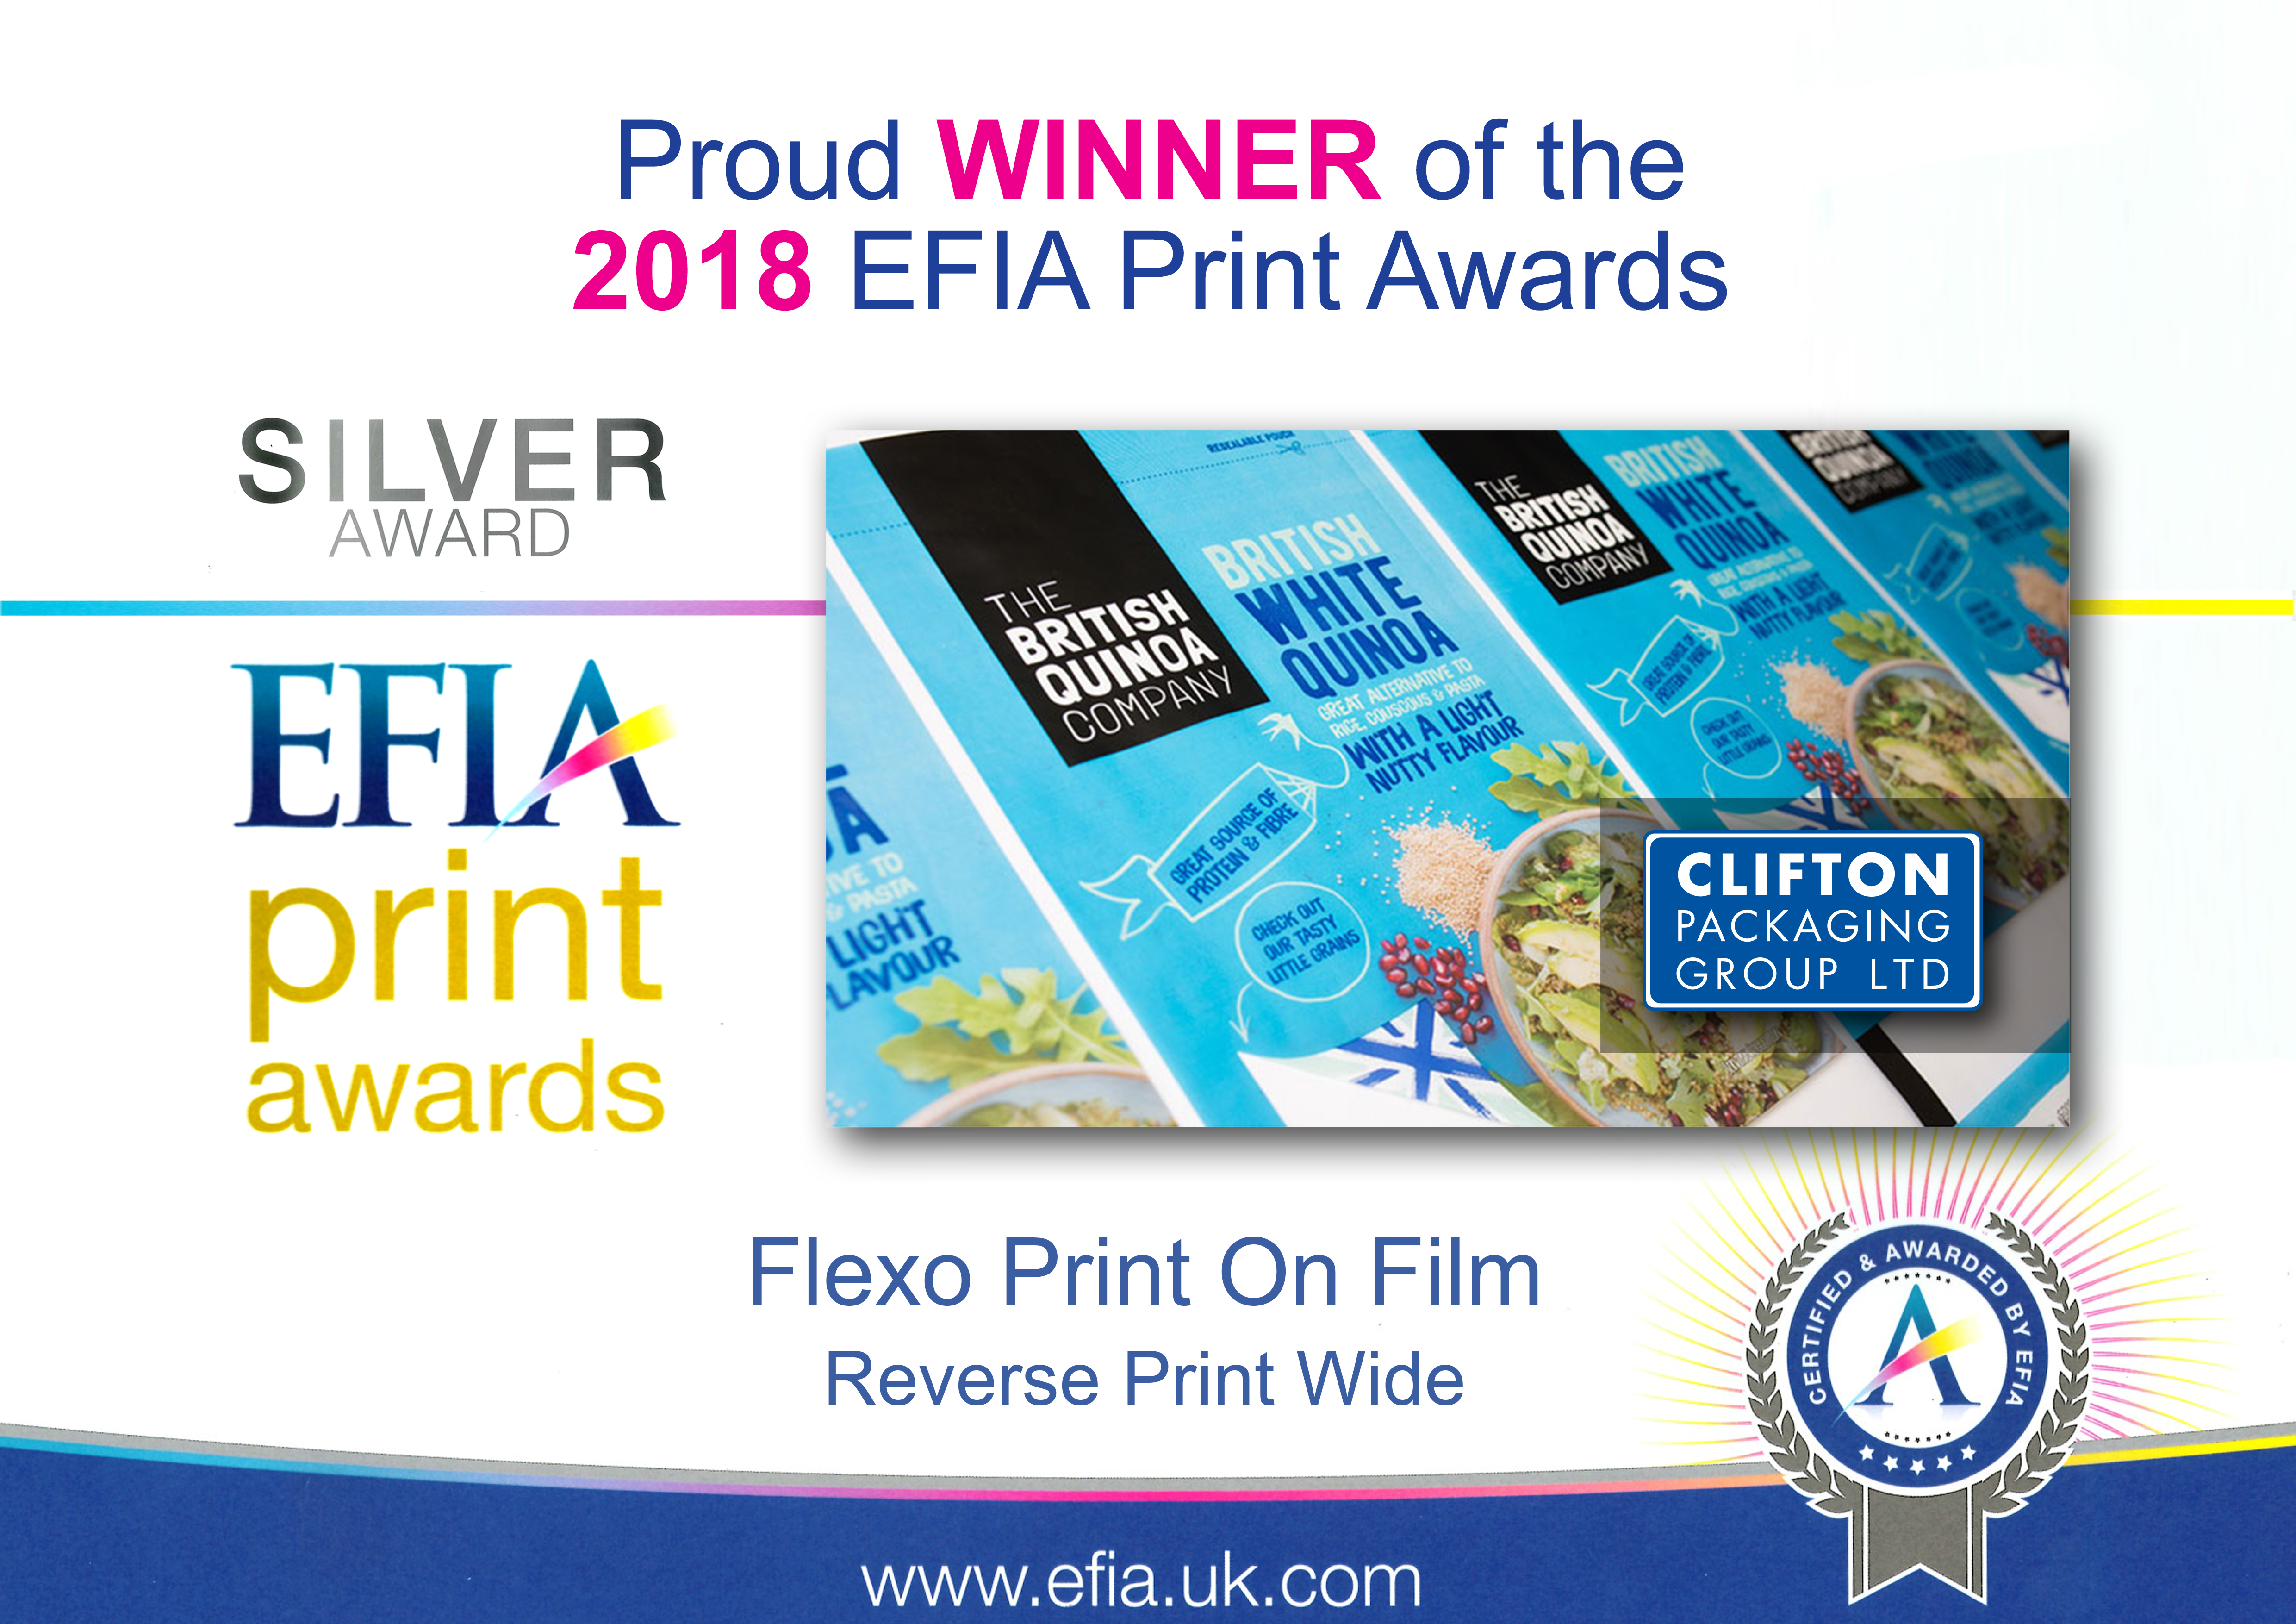 EFIA Print Awards 2018 - Silver Award - Flexo Print on Film Reverse Print Wide